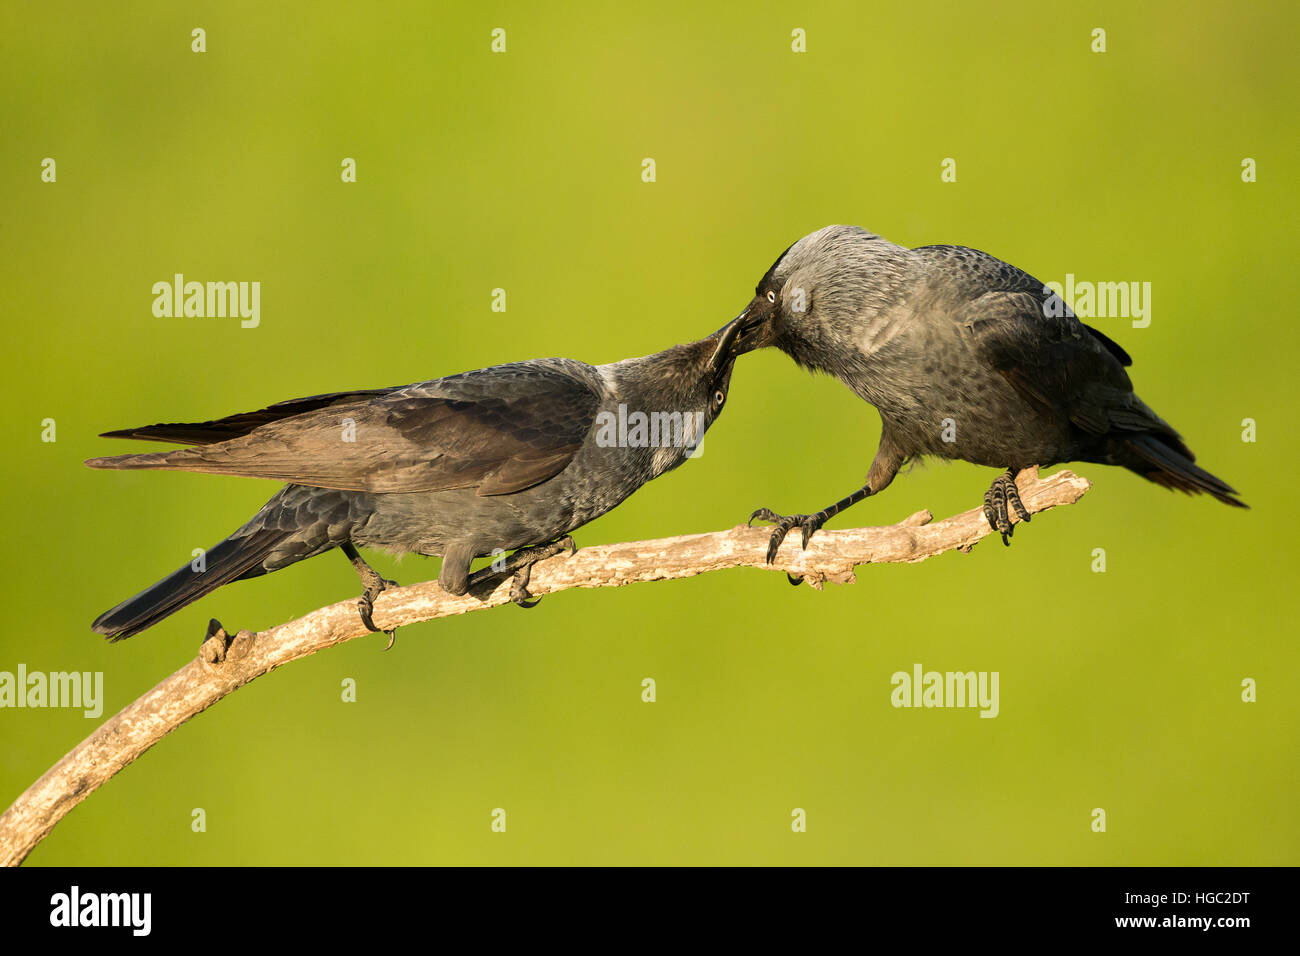 Jackdaws (Corvus monedula) passing food during mating season Stock Photo